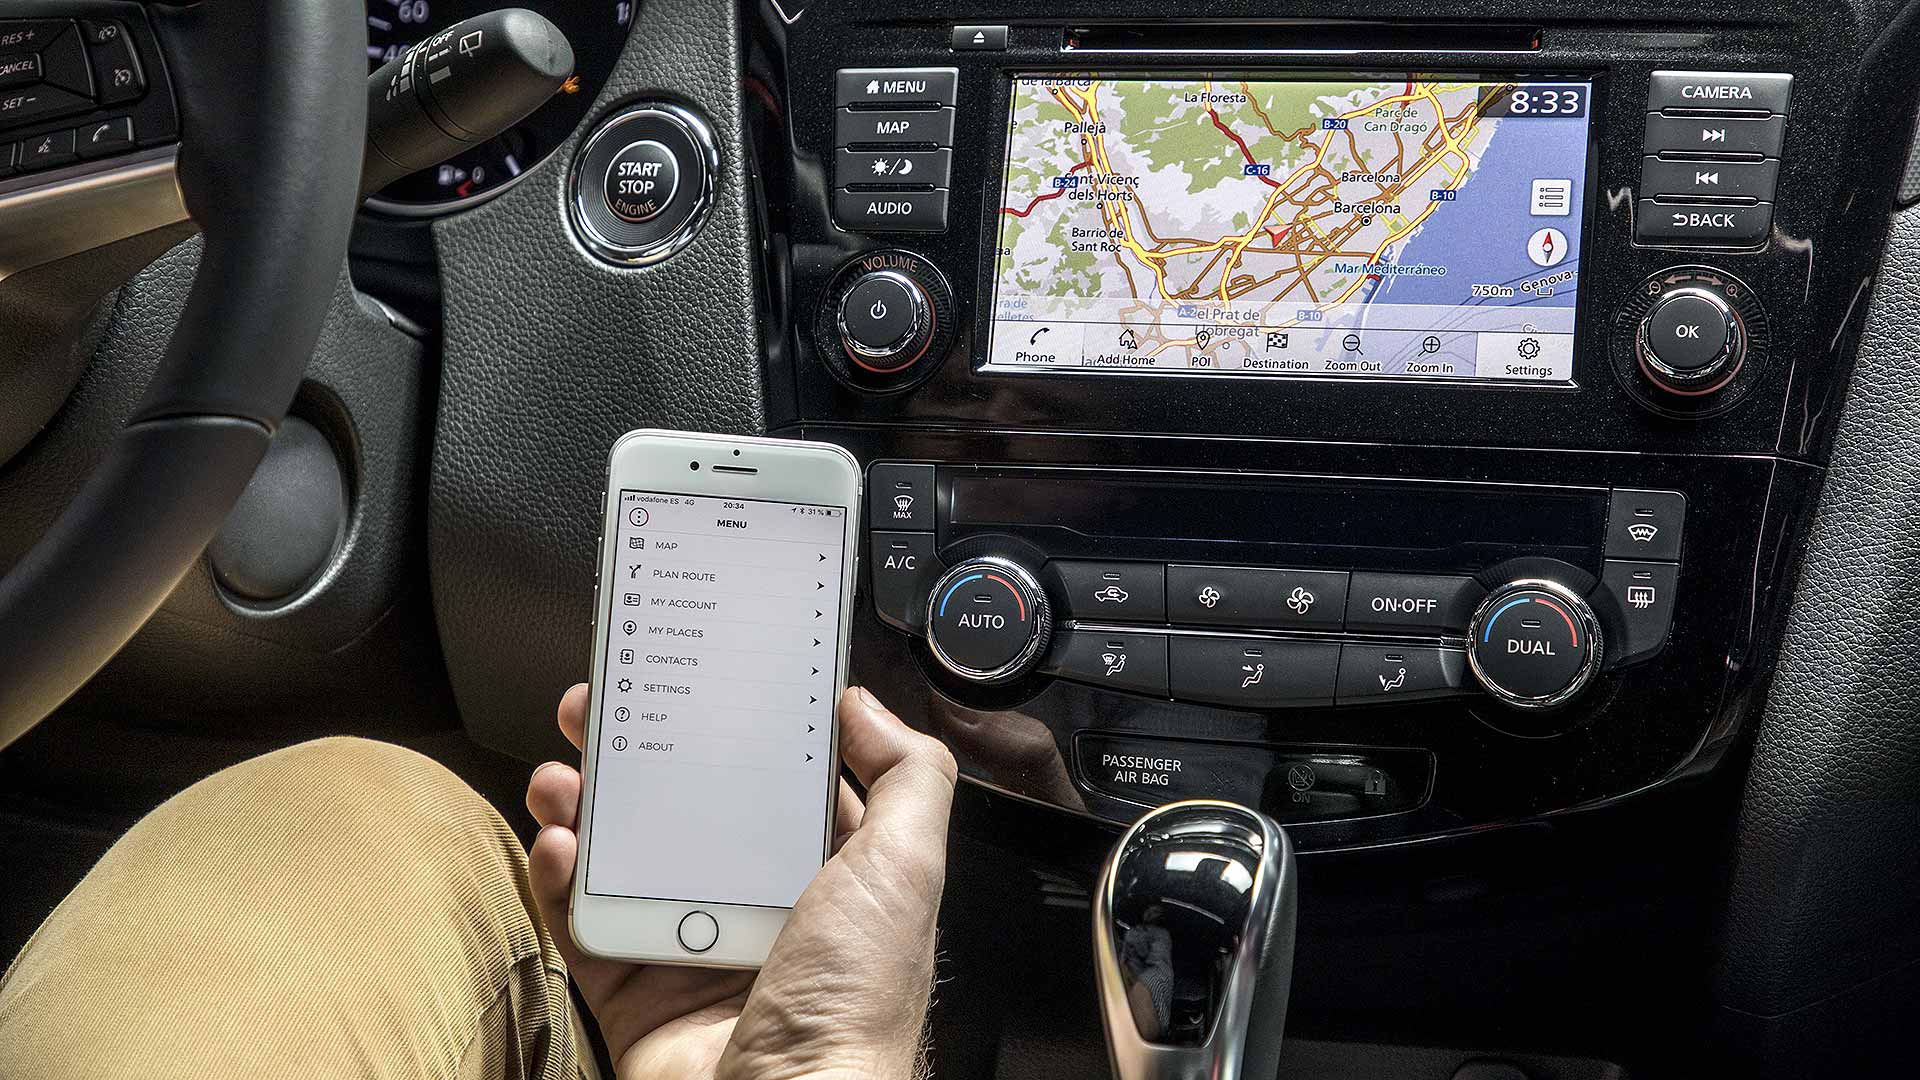 2019 Nissan Qashqai gets Apple CarPlay and Android Auto at